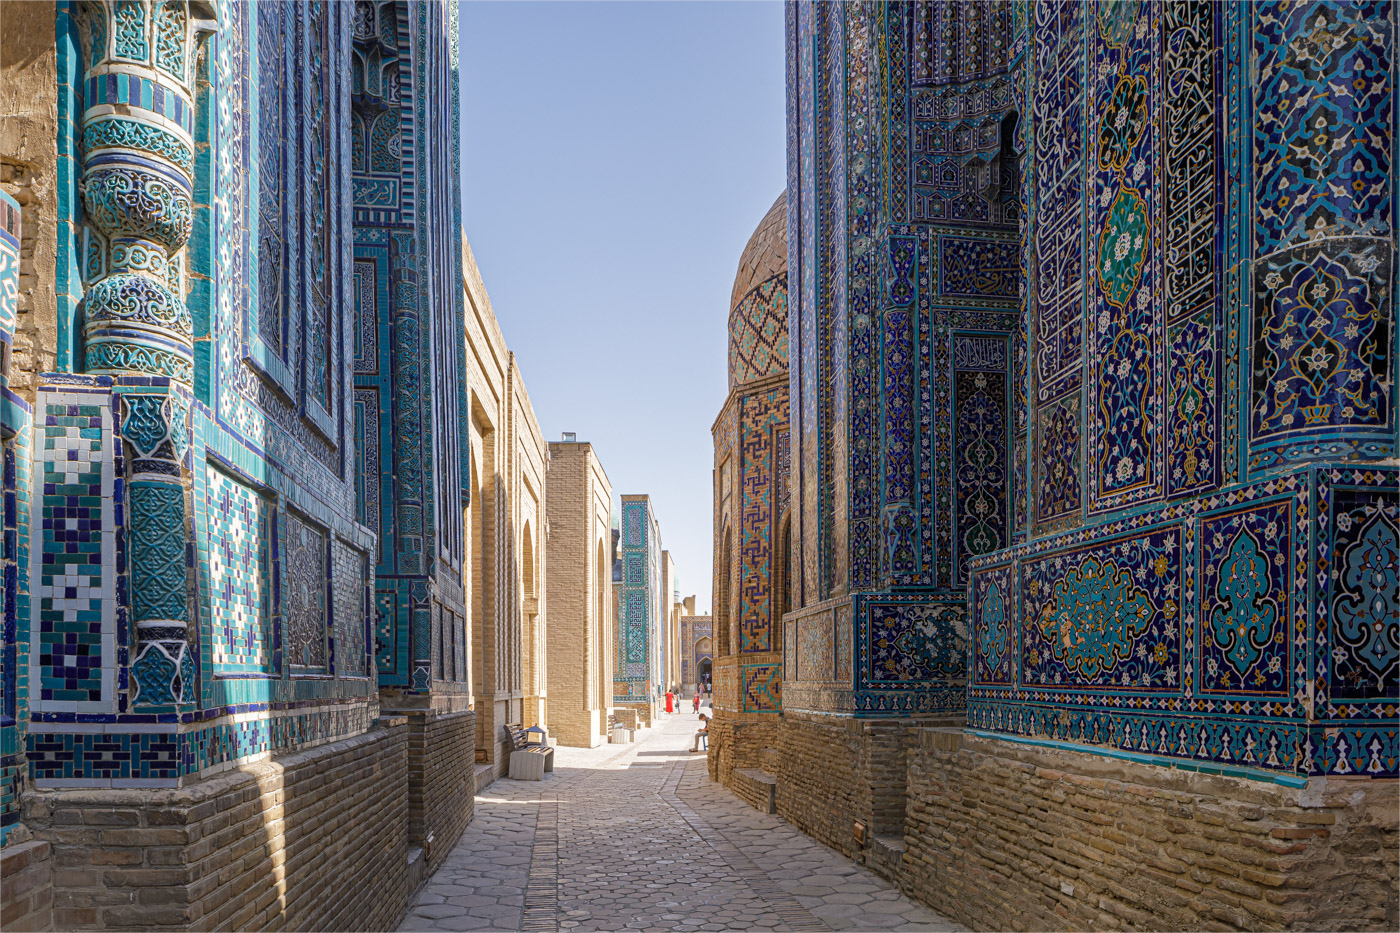 Shah-i-Zinda mausoleum in Samarkand, Uzbekistan